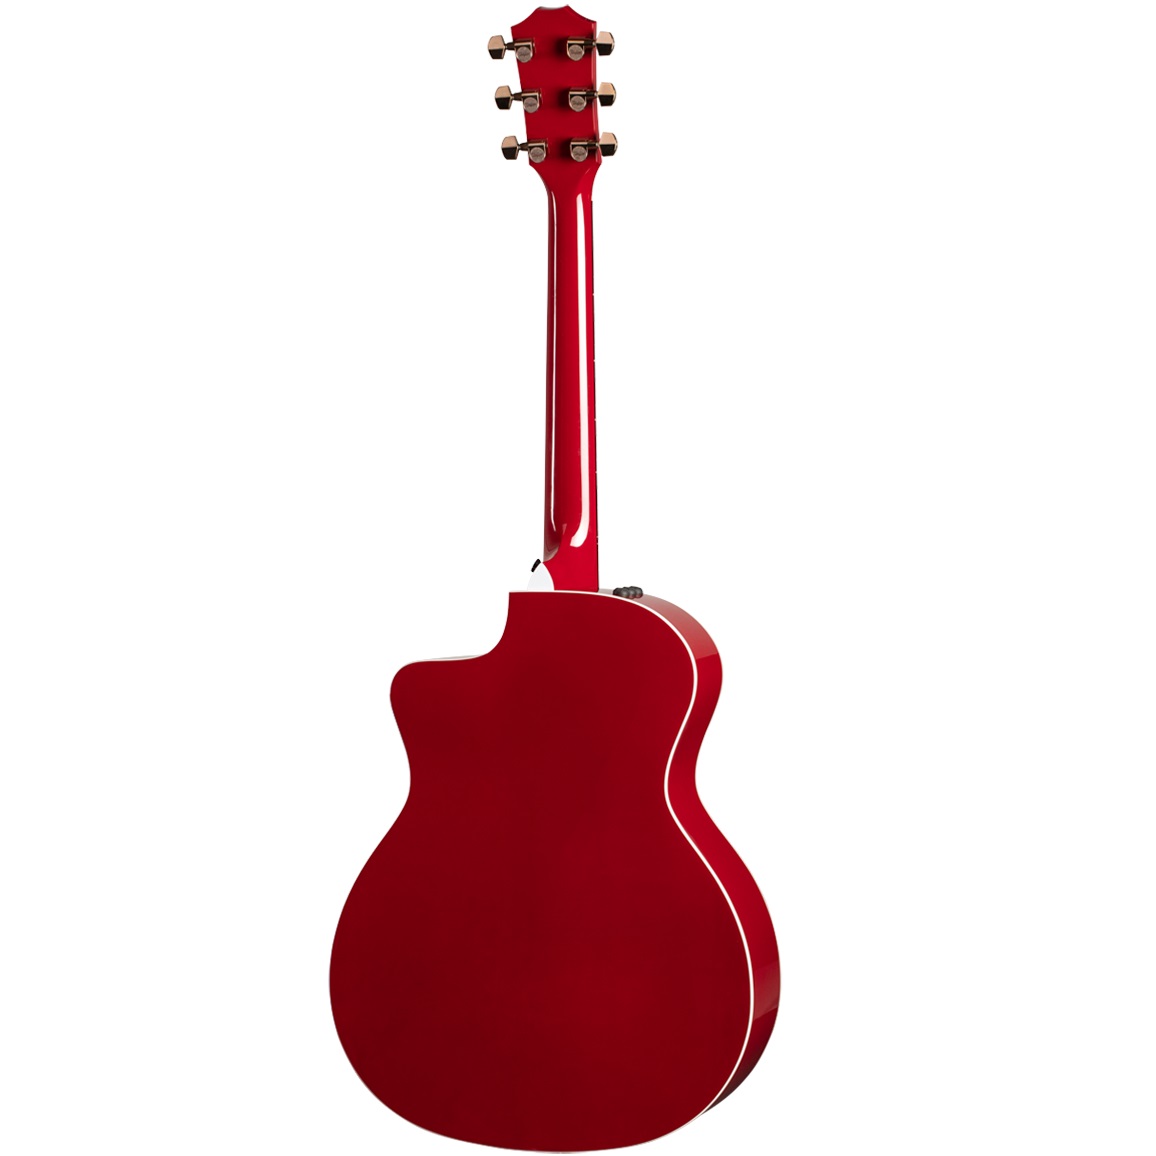 Taylor 214ce-Red DLX Grand Auditorium Acoustic-Electric Guitar